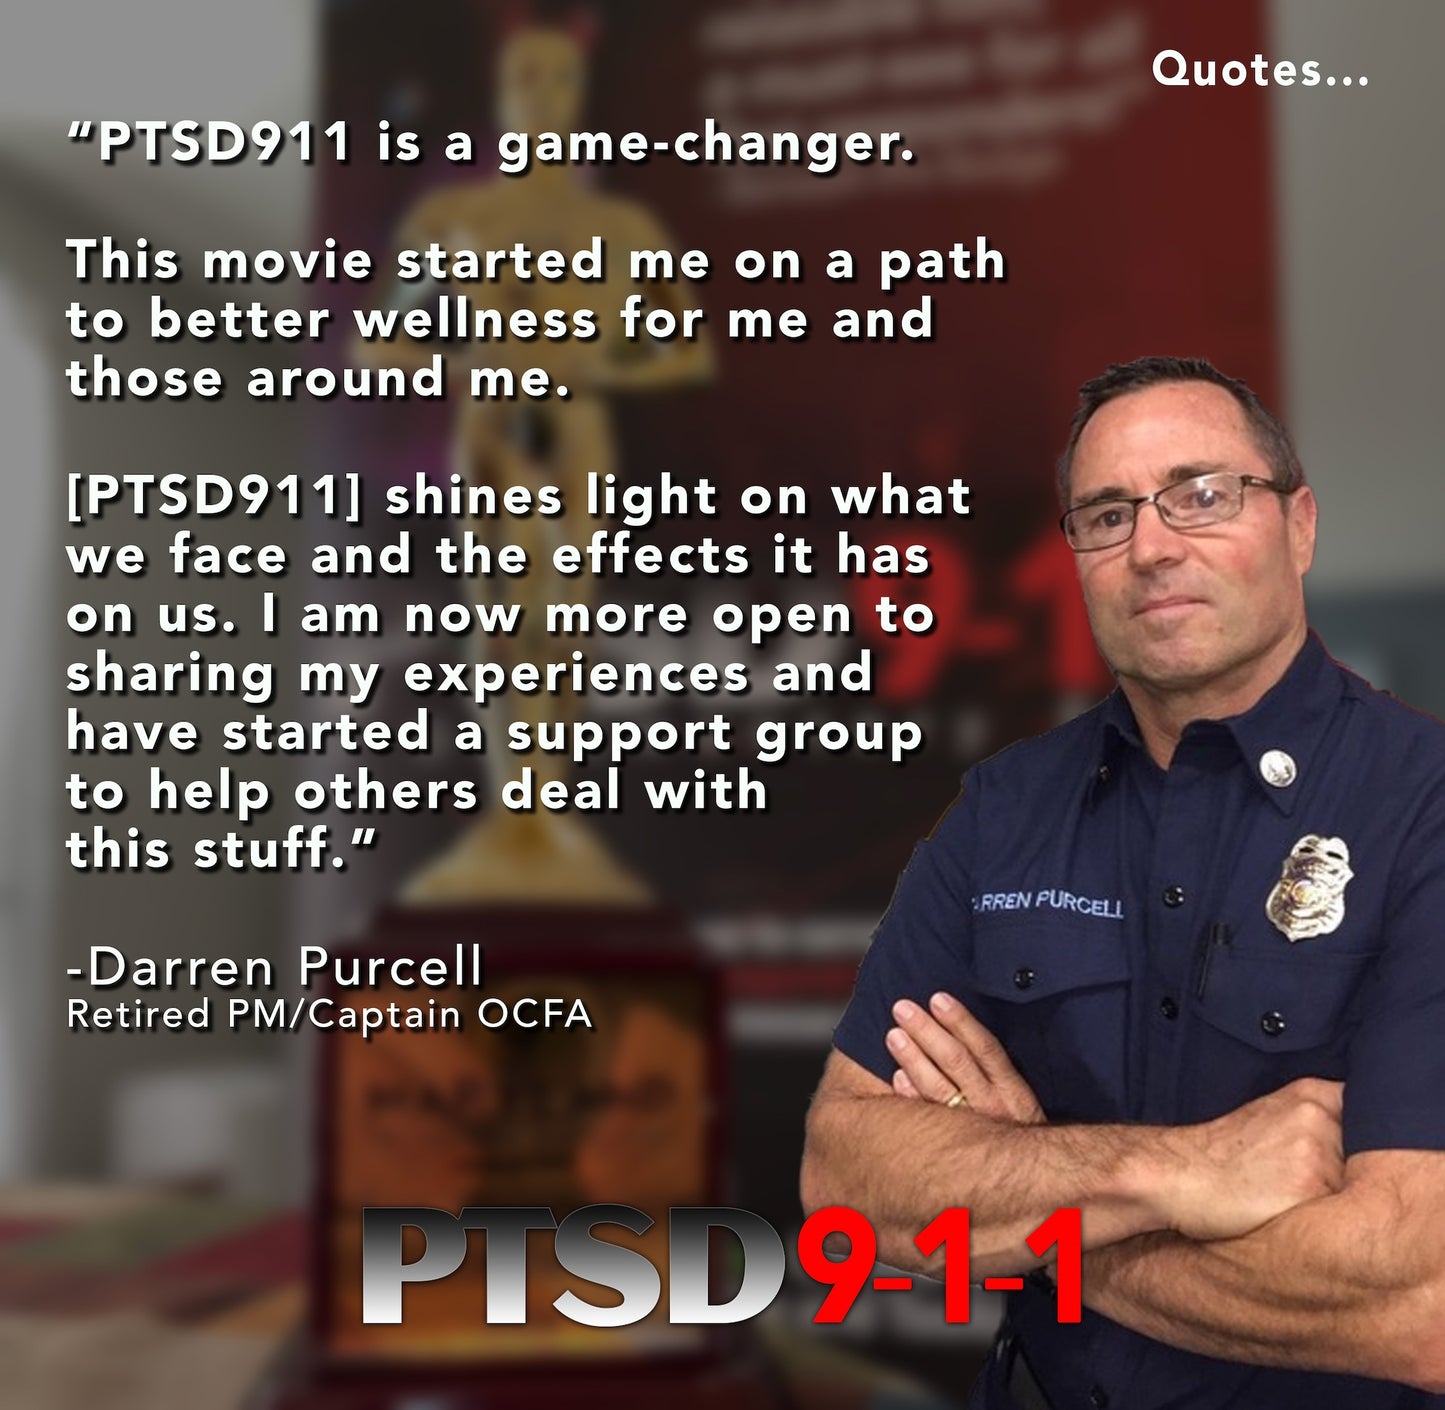 PTSD911 Film and Educational Toolkit